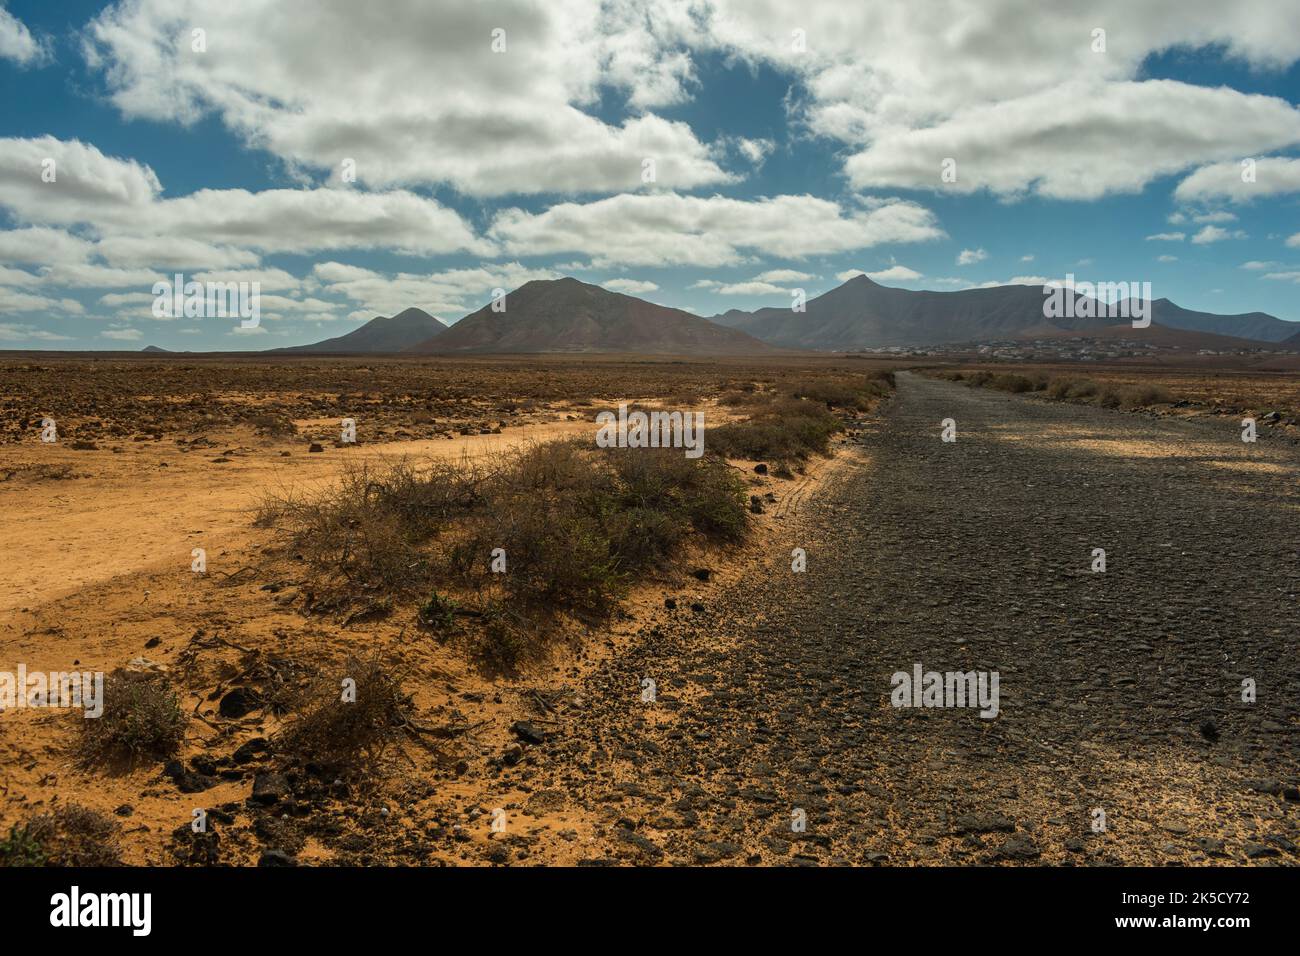 A typical desertic enviroment of Fuerteventura island Stock Photo